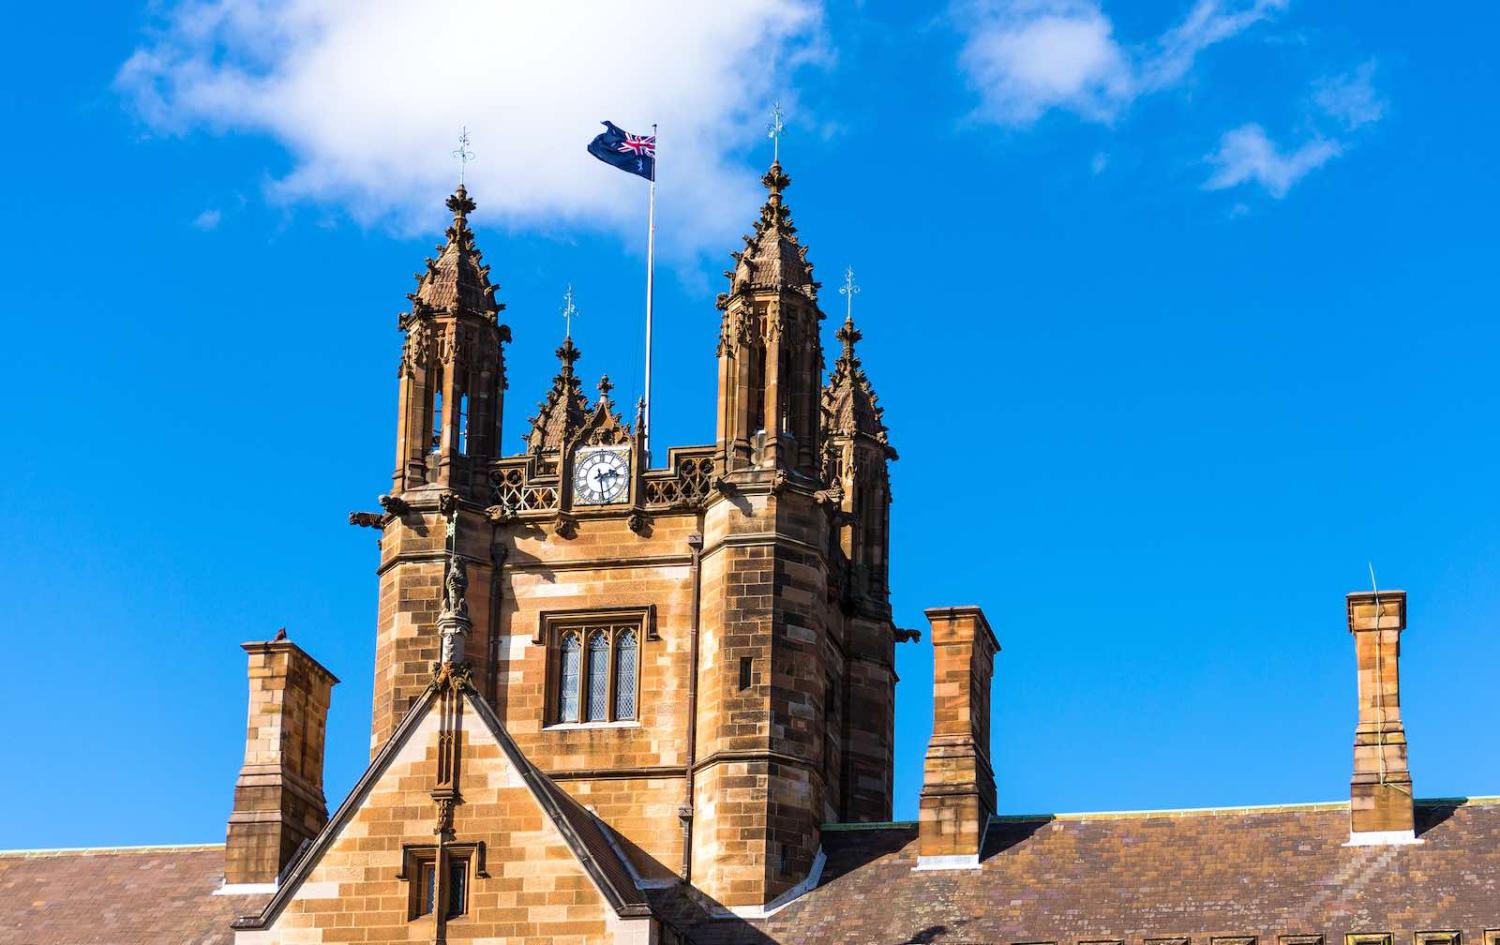 The flag flies over Sydney Uni (Photo: Katharina13/Getty Images)